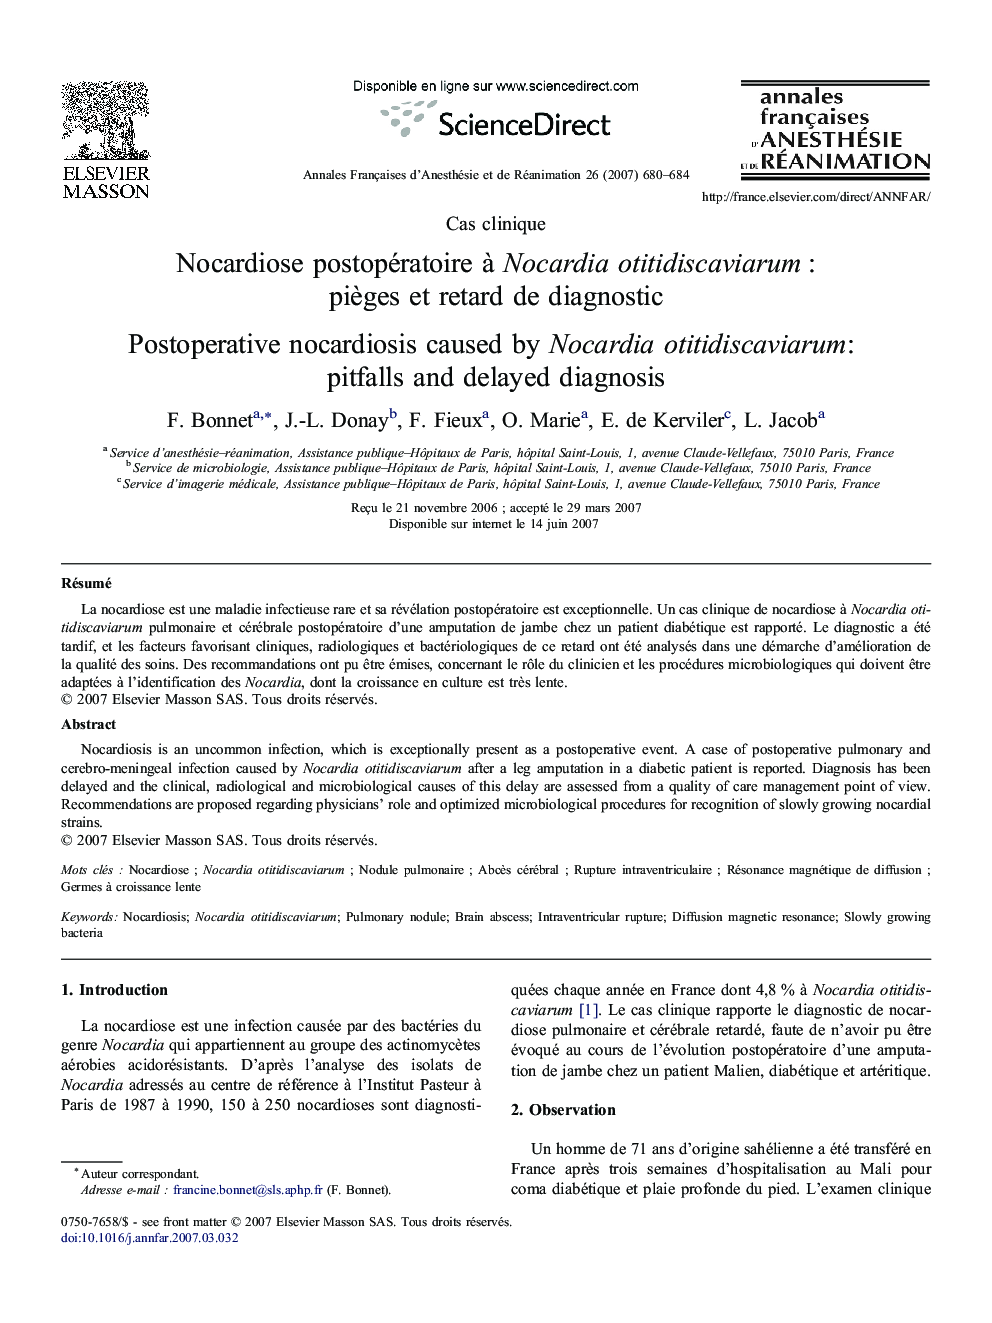 Nocardiose postopératoire à Nocardia otitidiscaviarum : pièges et retard de diagnostic